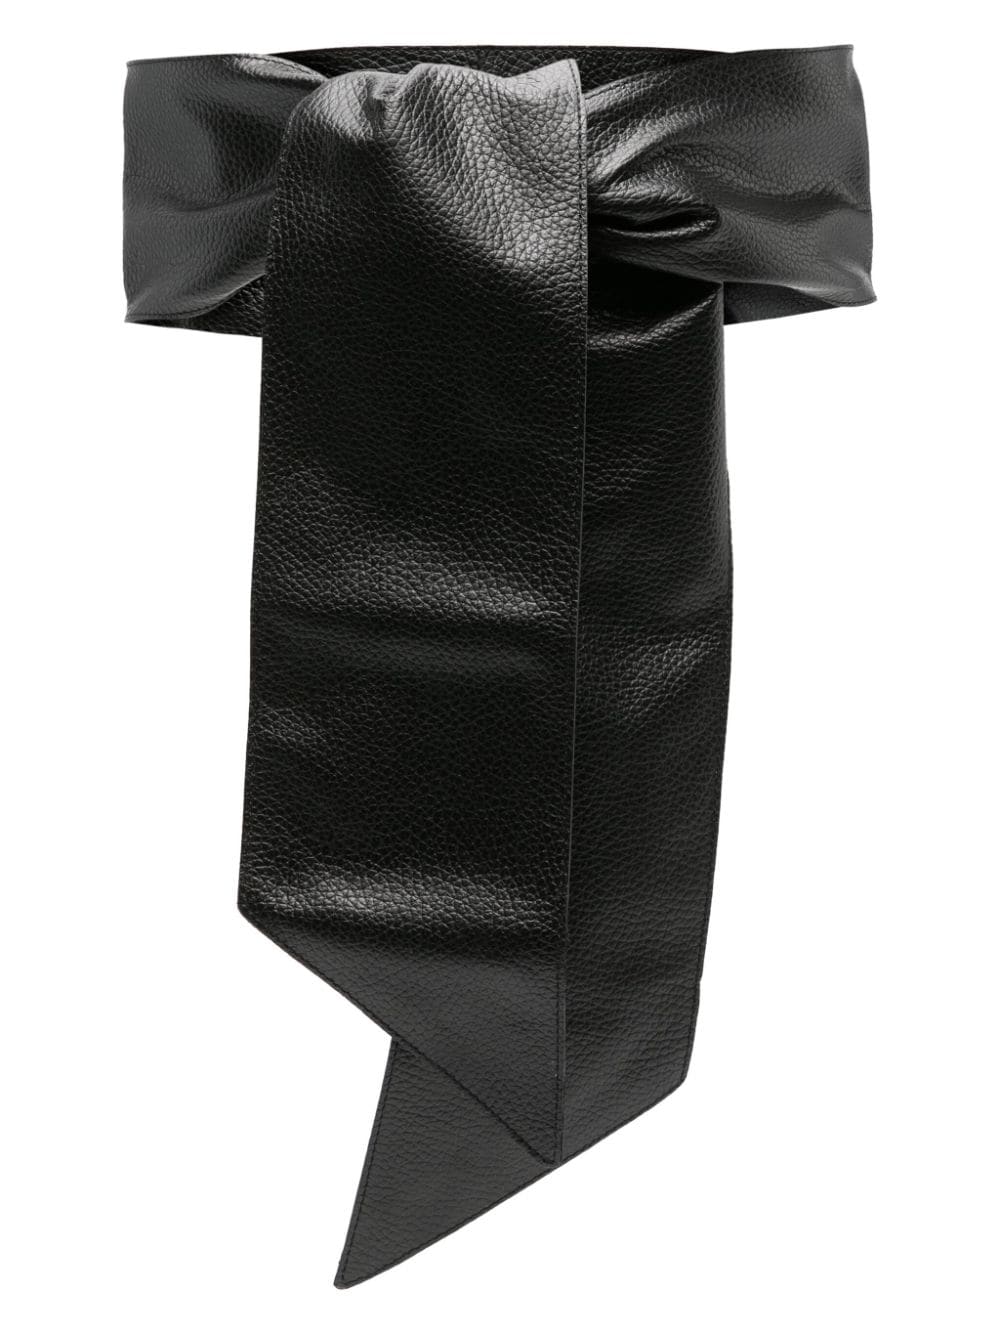 Orciani self-tie leather belt - Black von Orciani